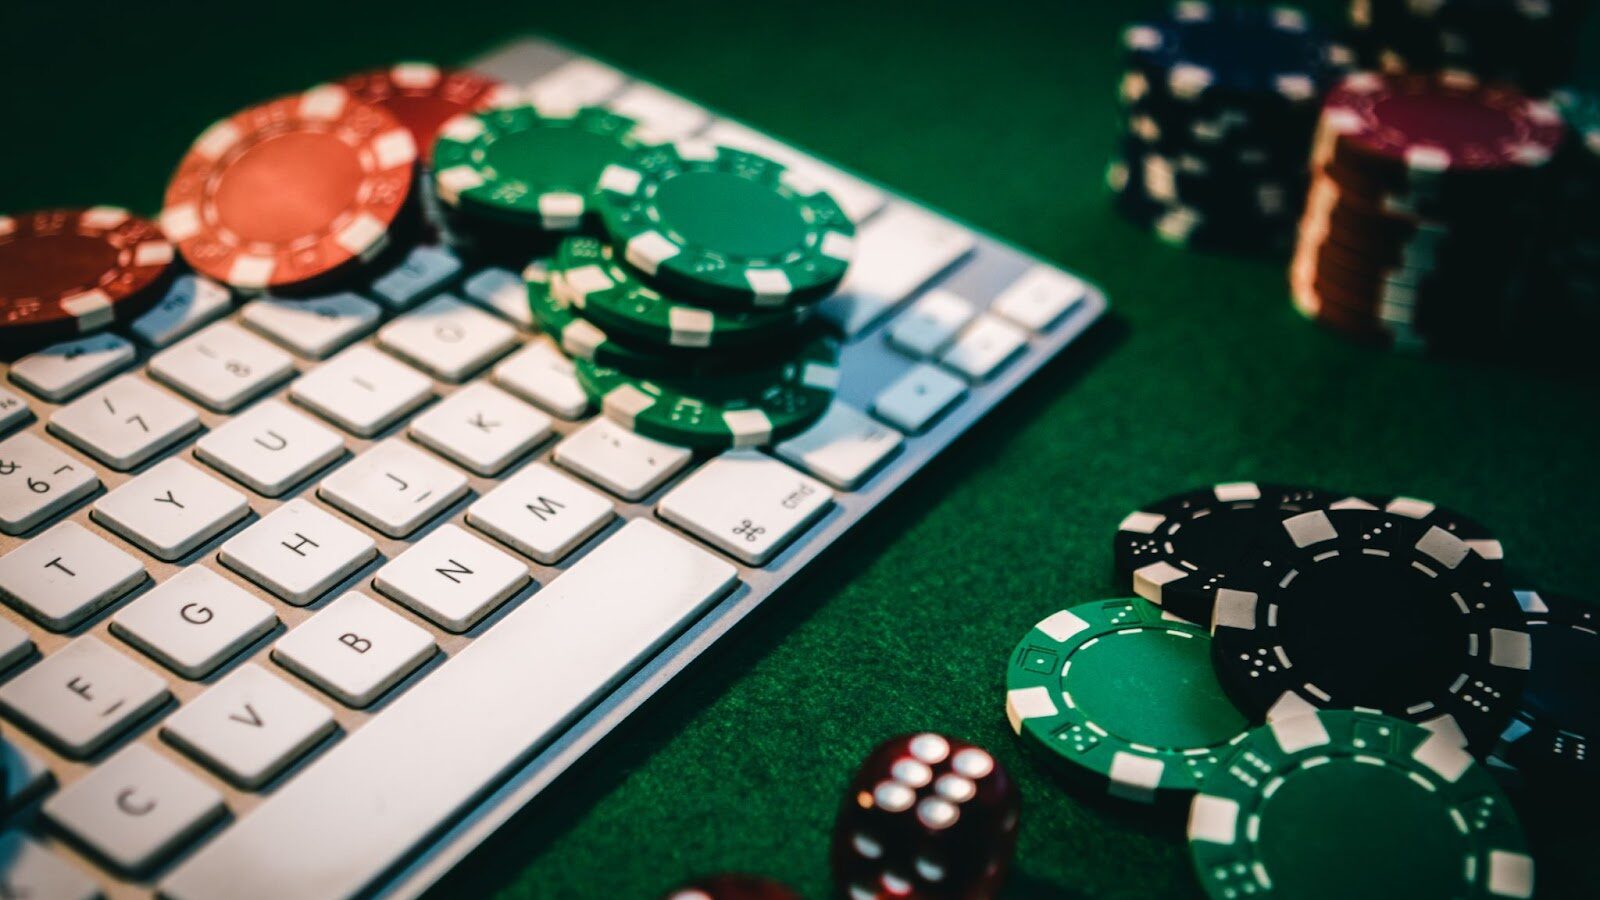 borgata online casino